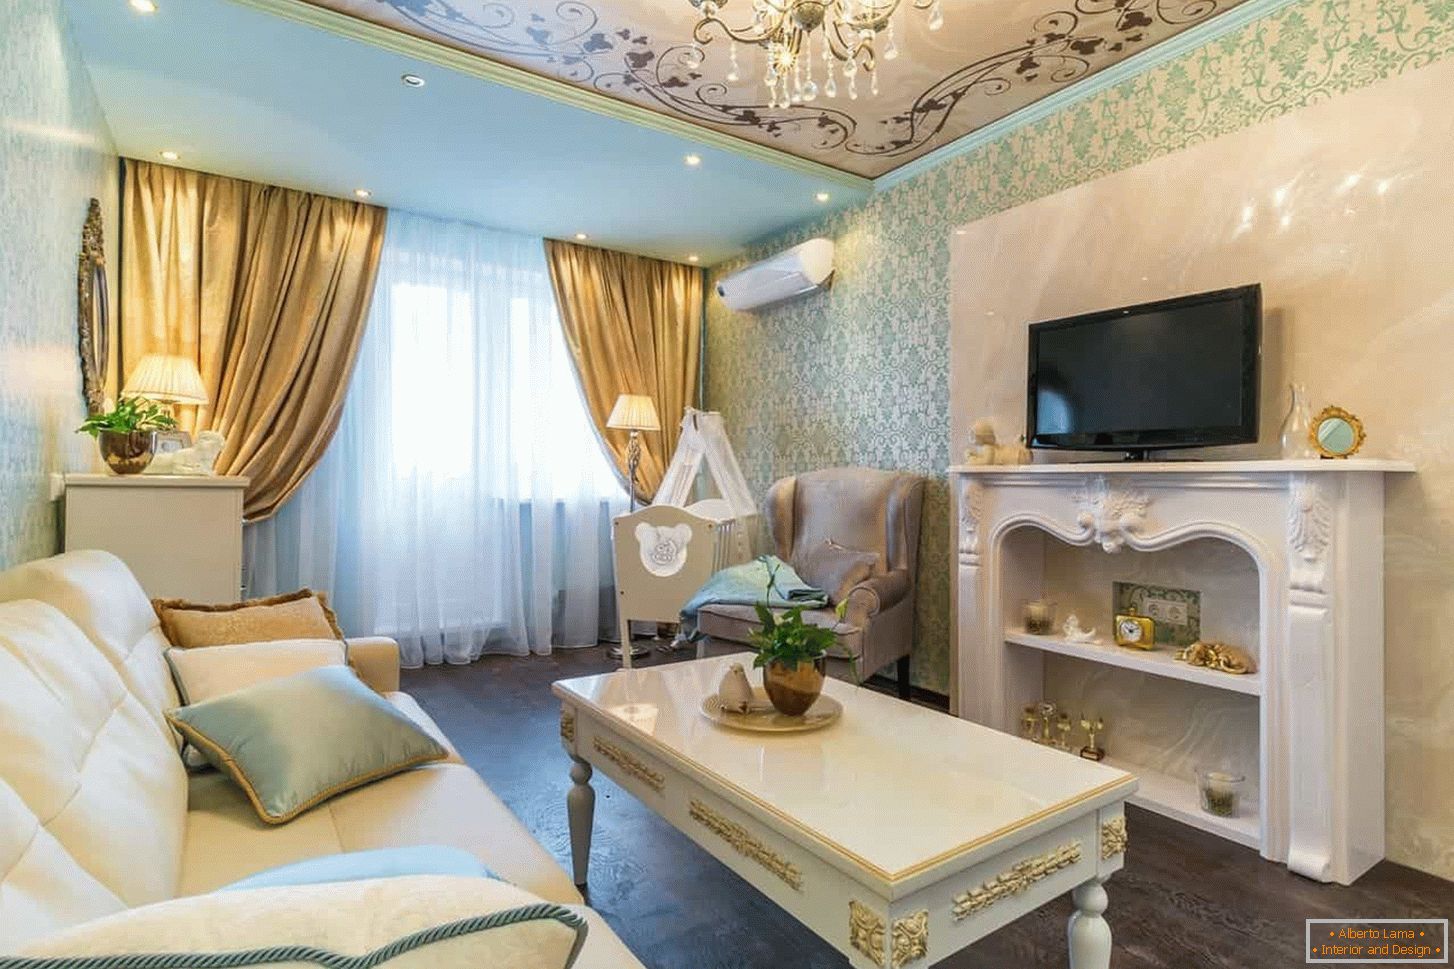 Sala de estar en estilo clásico con acabado dorado, adorno de techo